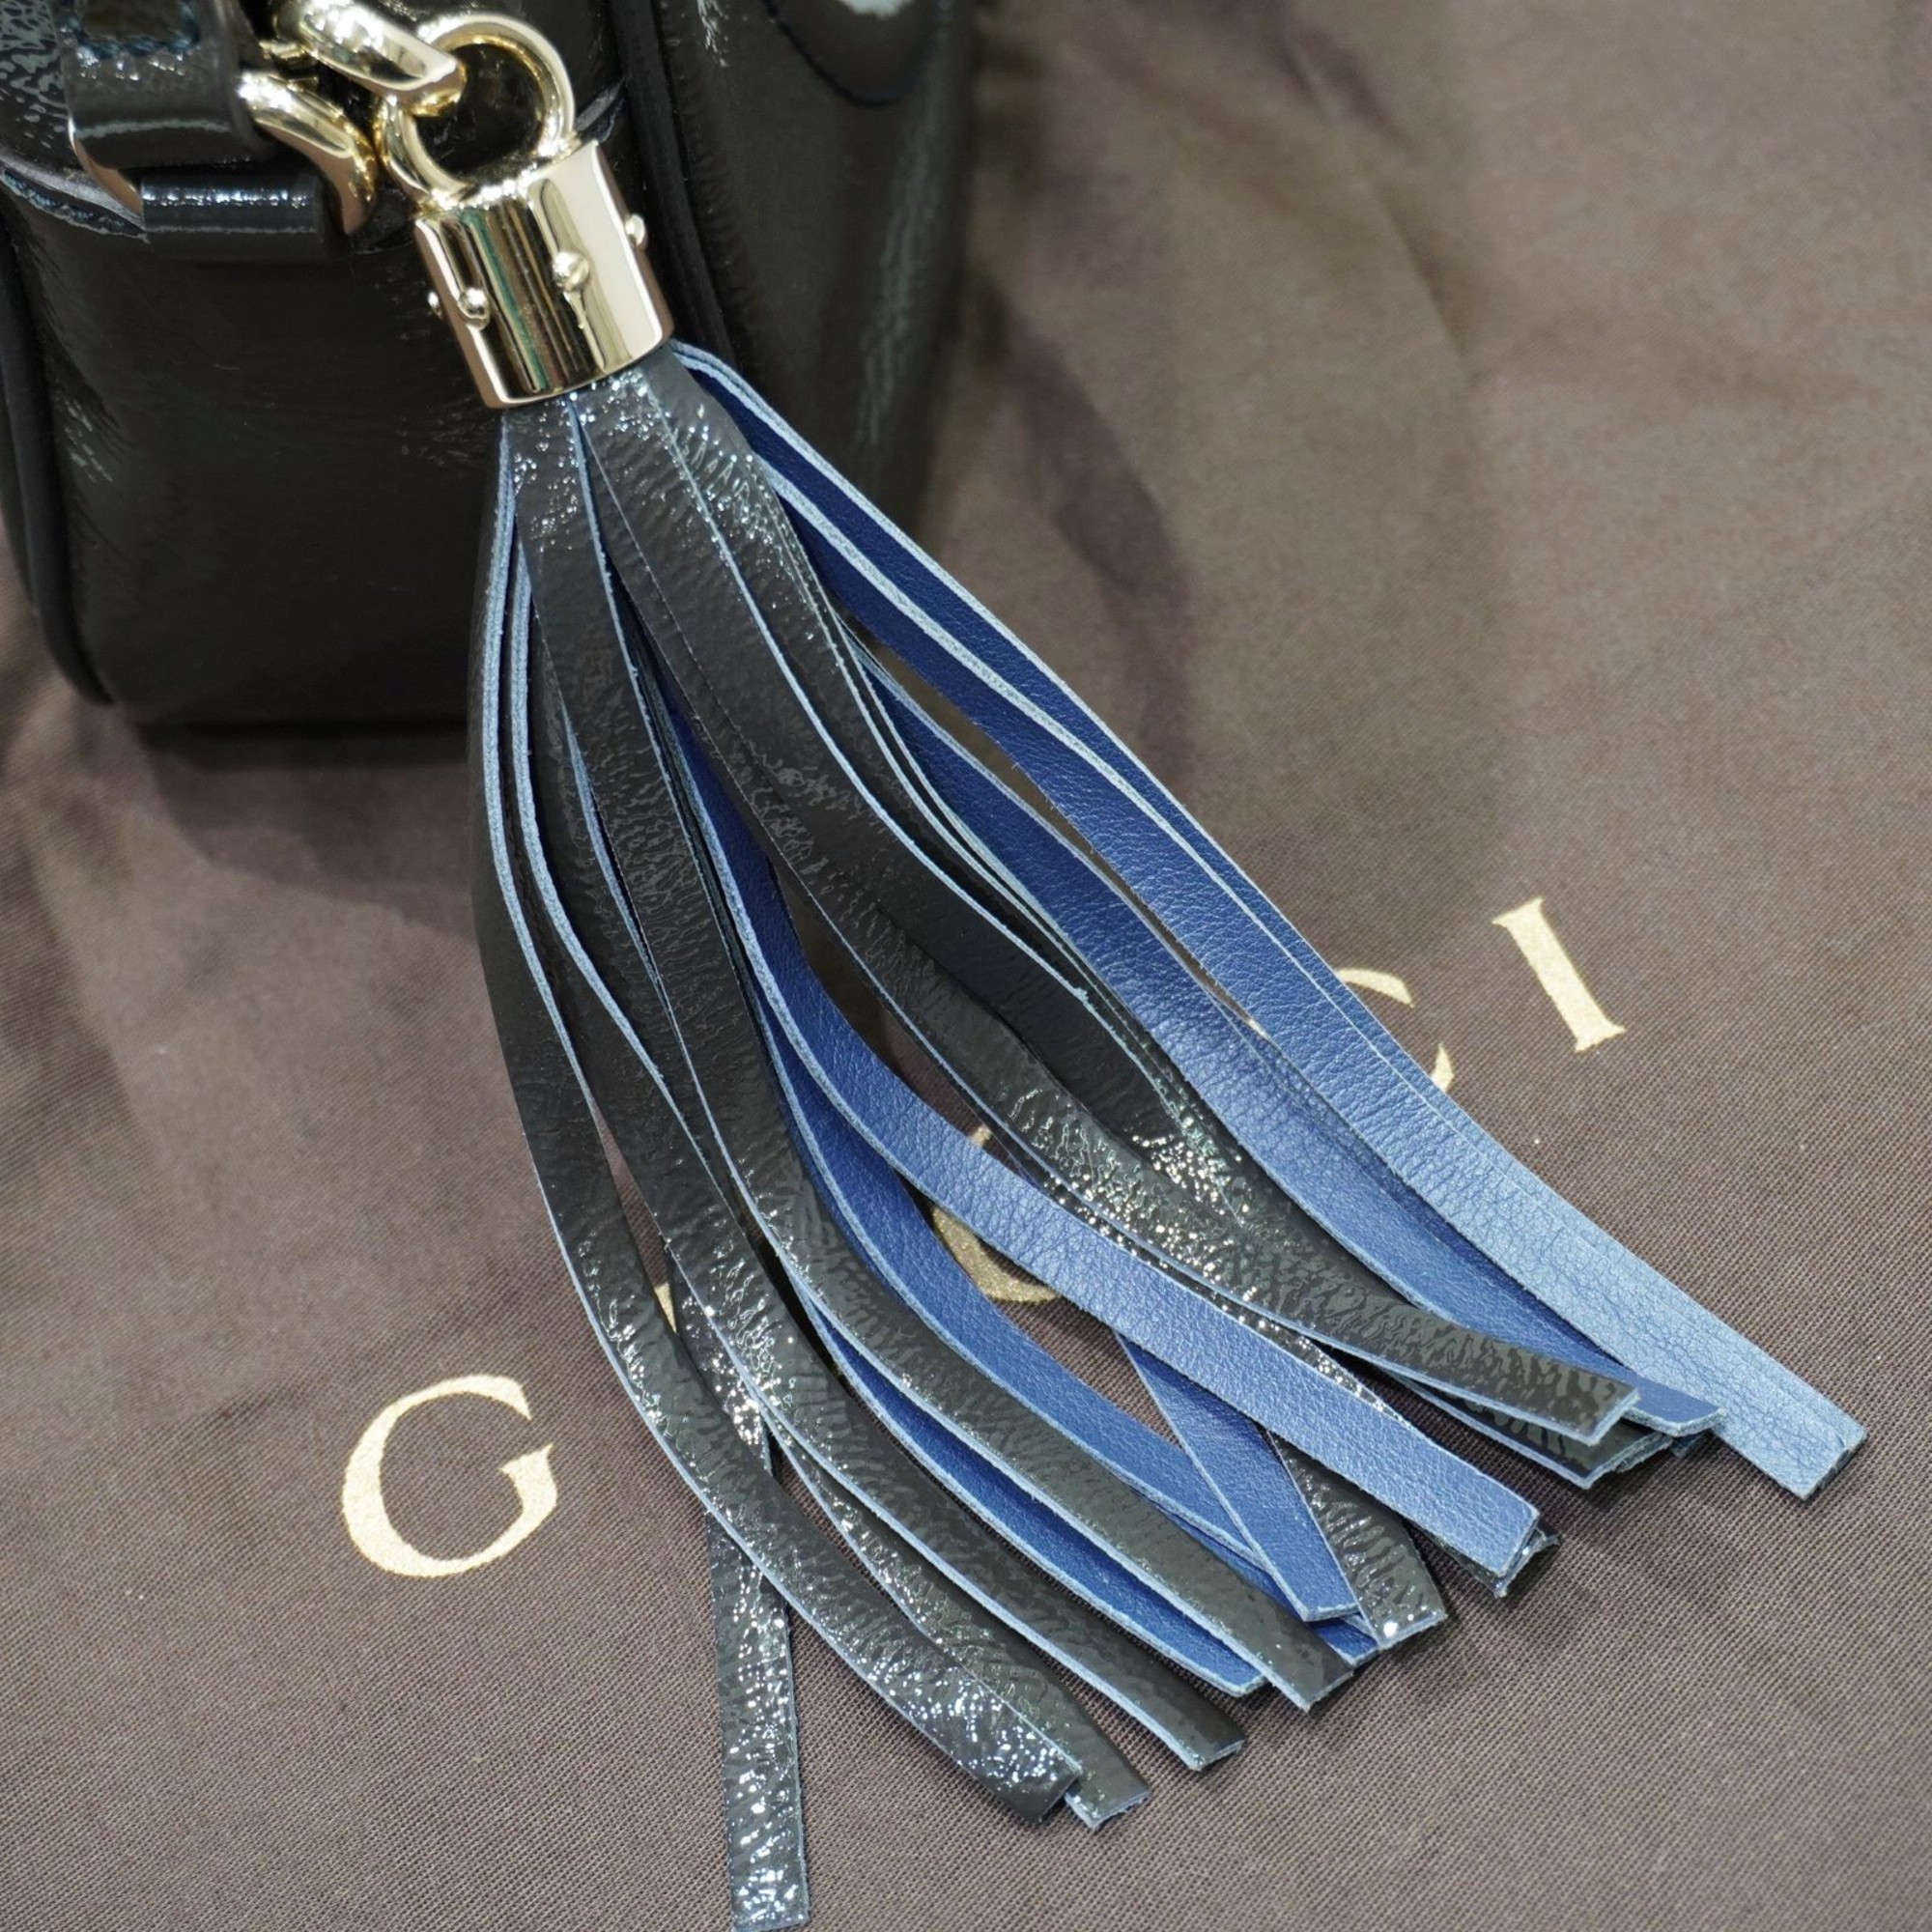 GUCCI Soho Leather Shoulder Bag 308364 498879 Khaki Blue Patent Women's Men's